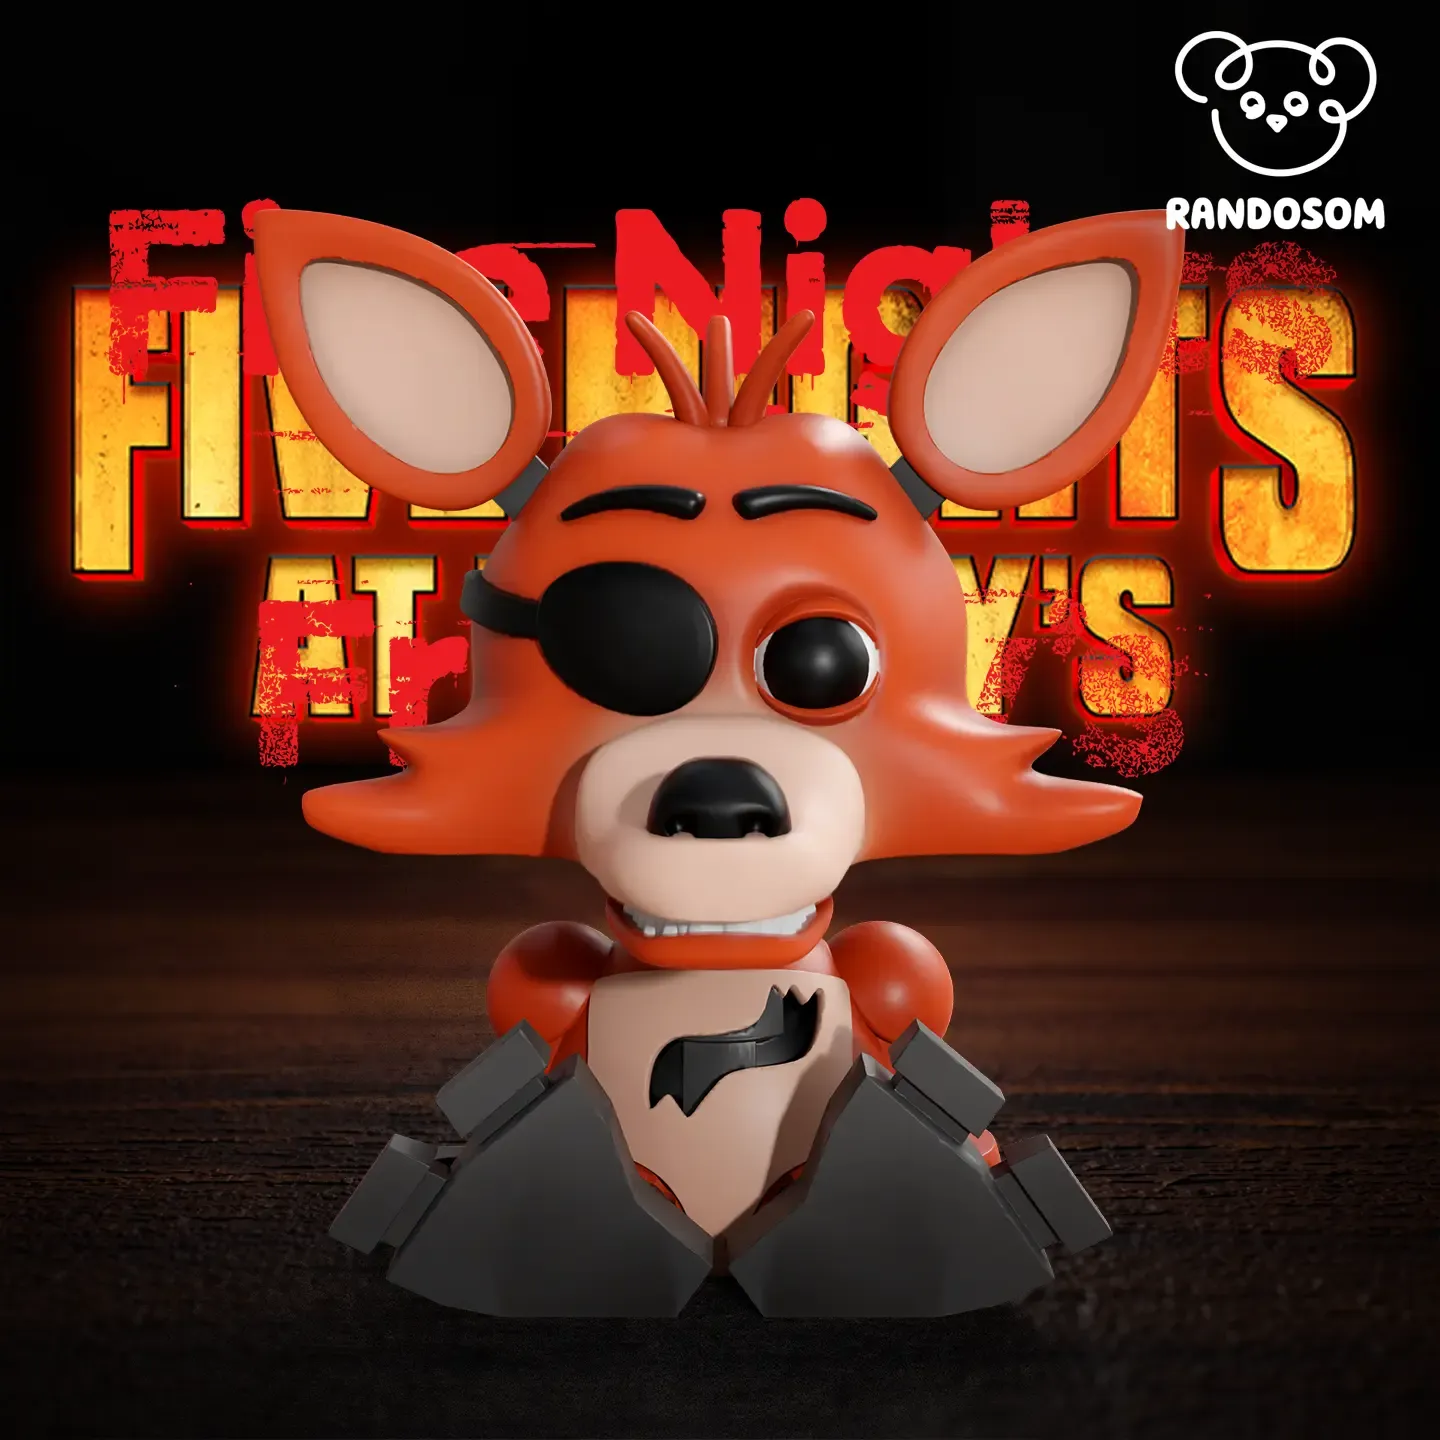 Bobblehead Foxy - Five night at freddy's